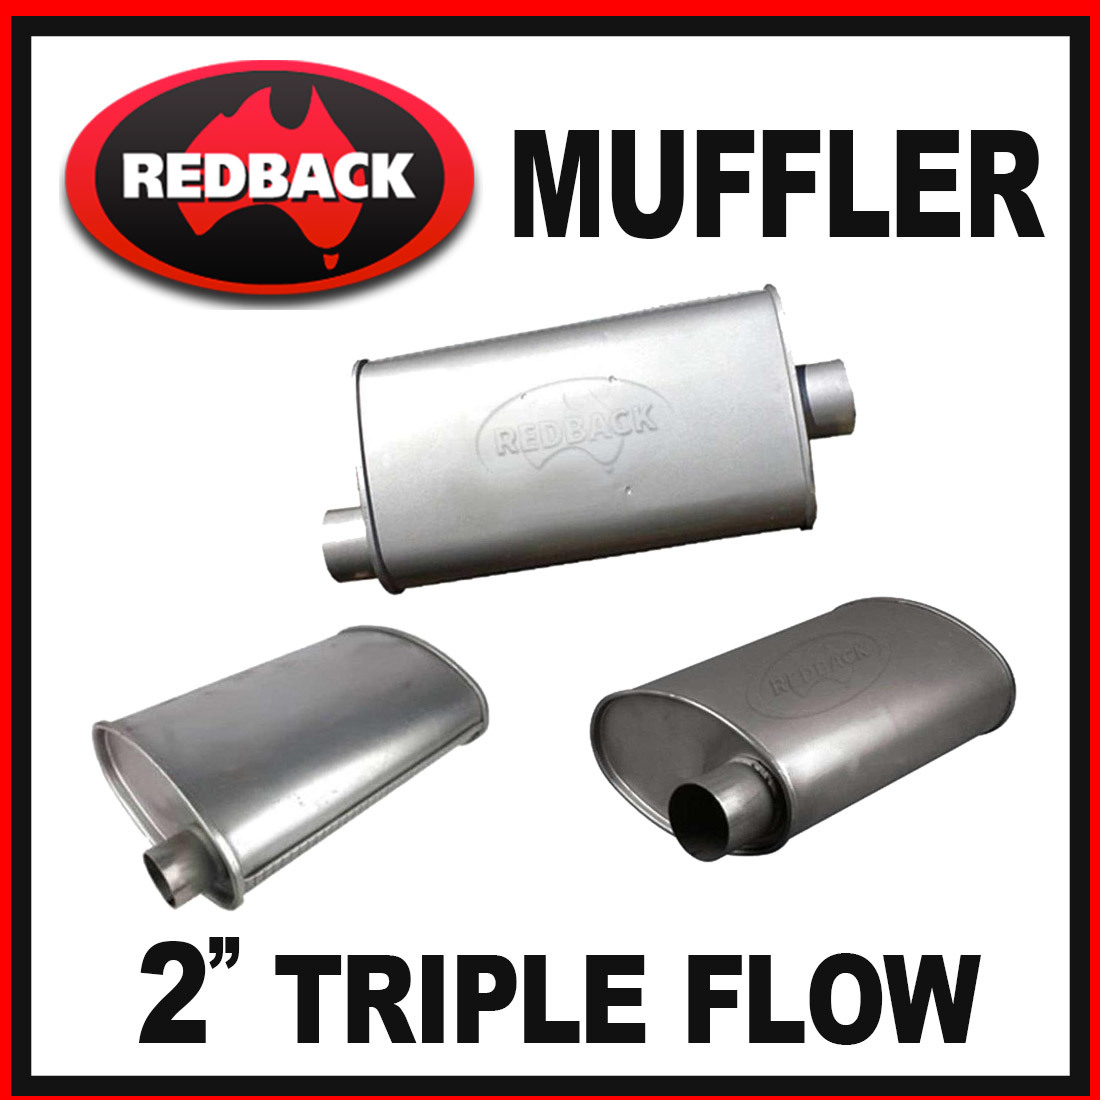 Redback 2" Triple Flow Muffler image